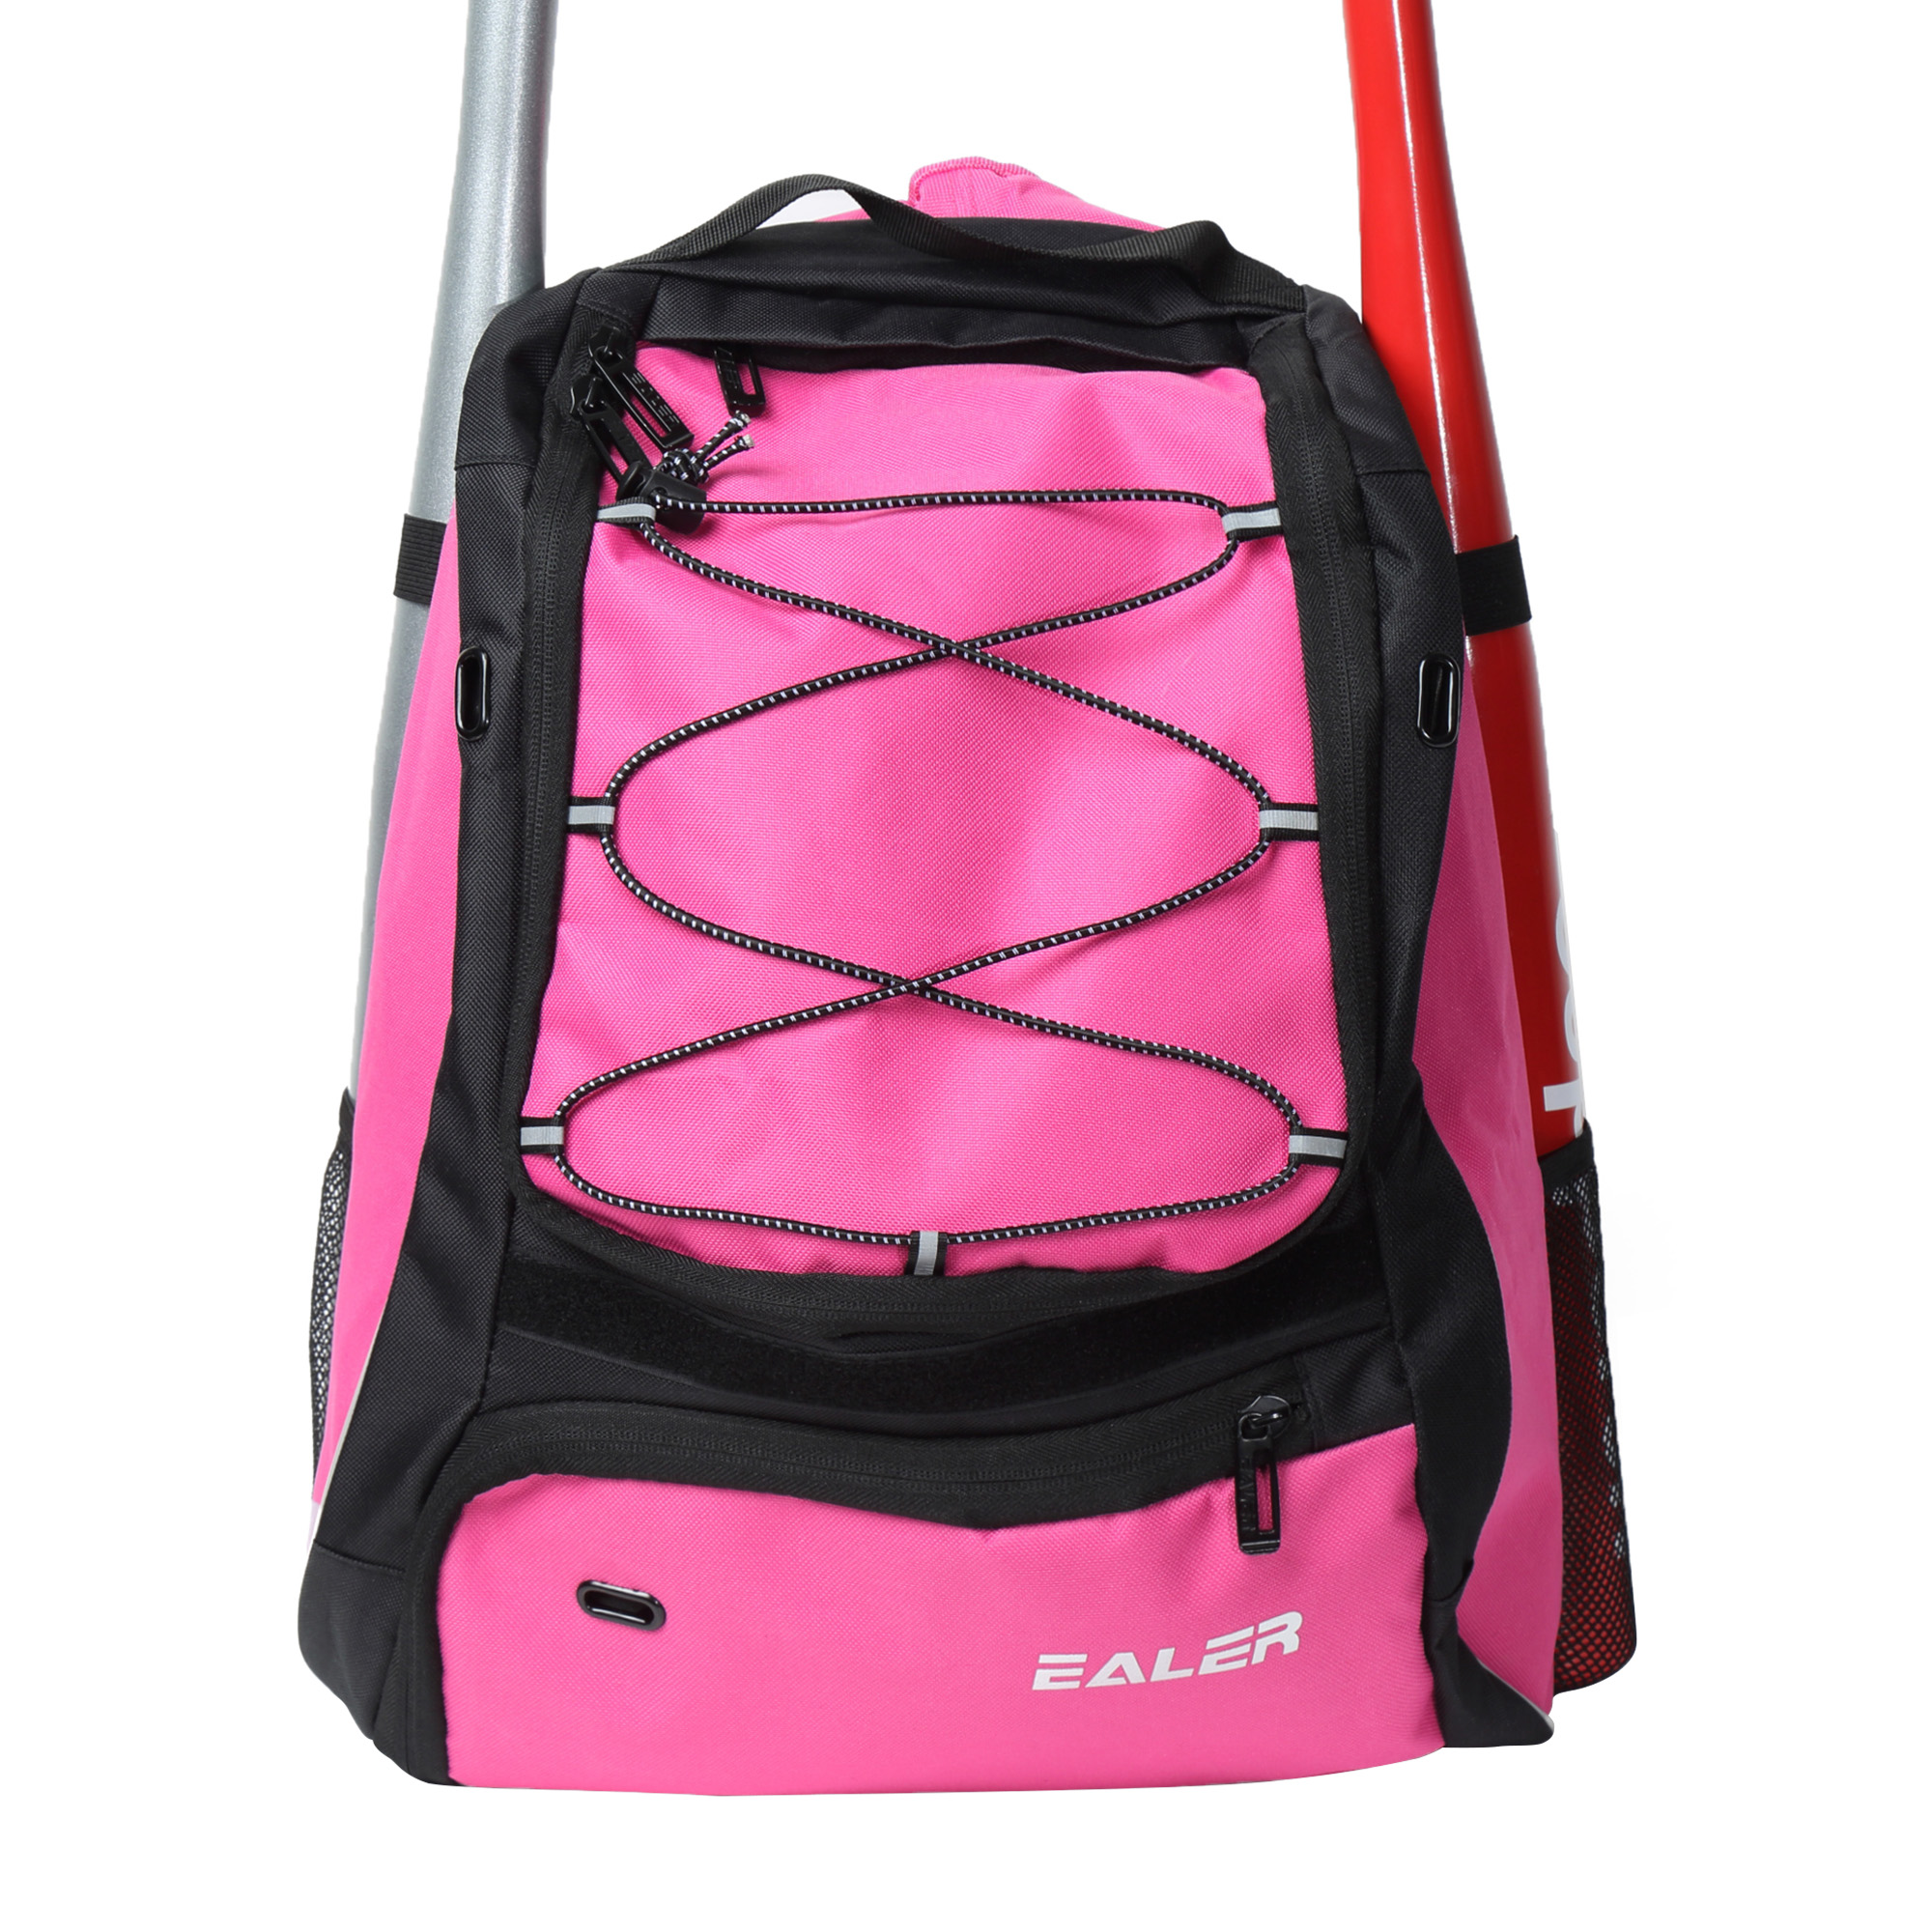 Baseball Backpack for Youth and Adults Baseball Bag Softball Bat Bag Red 